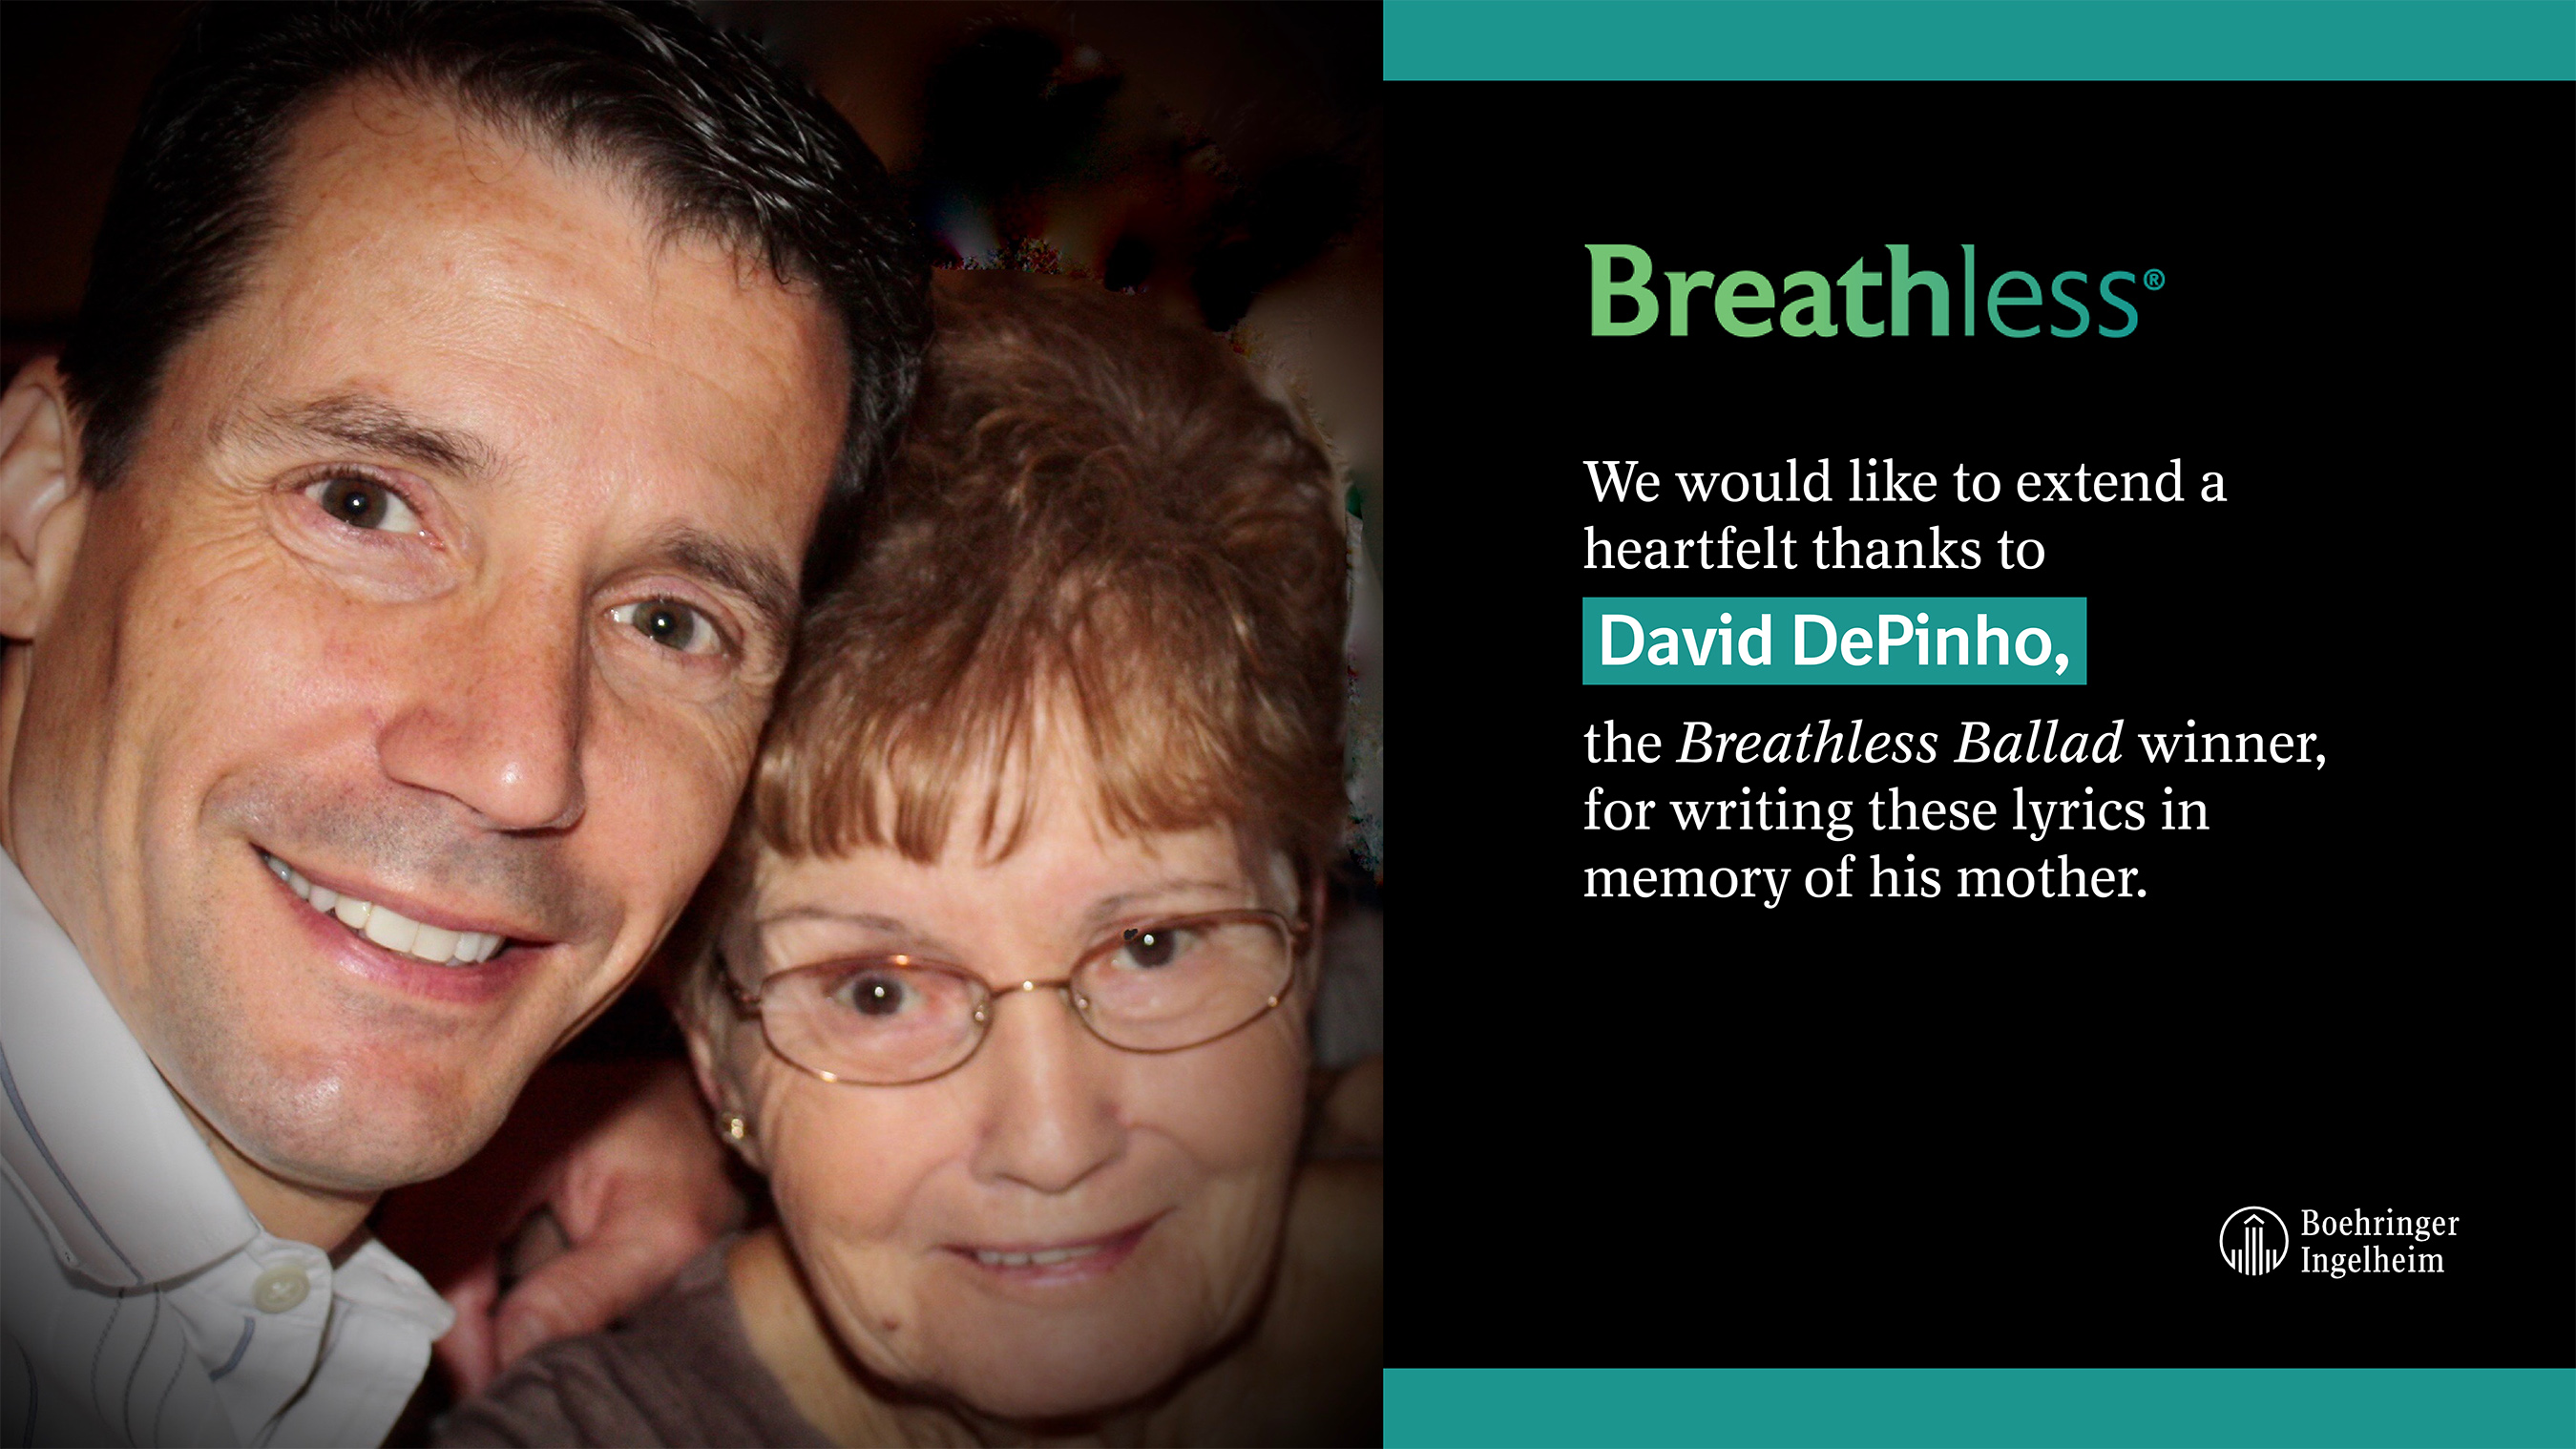 Breathless Ballad Challenge winner David DePinho and his mother